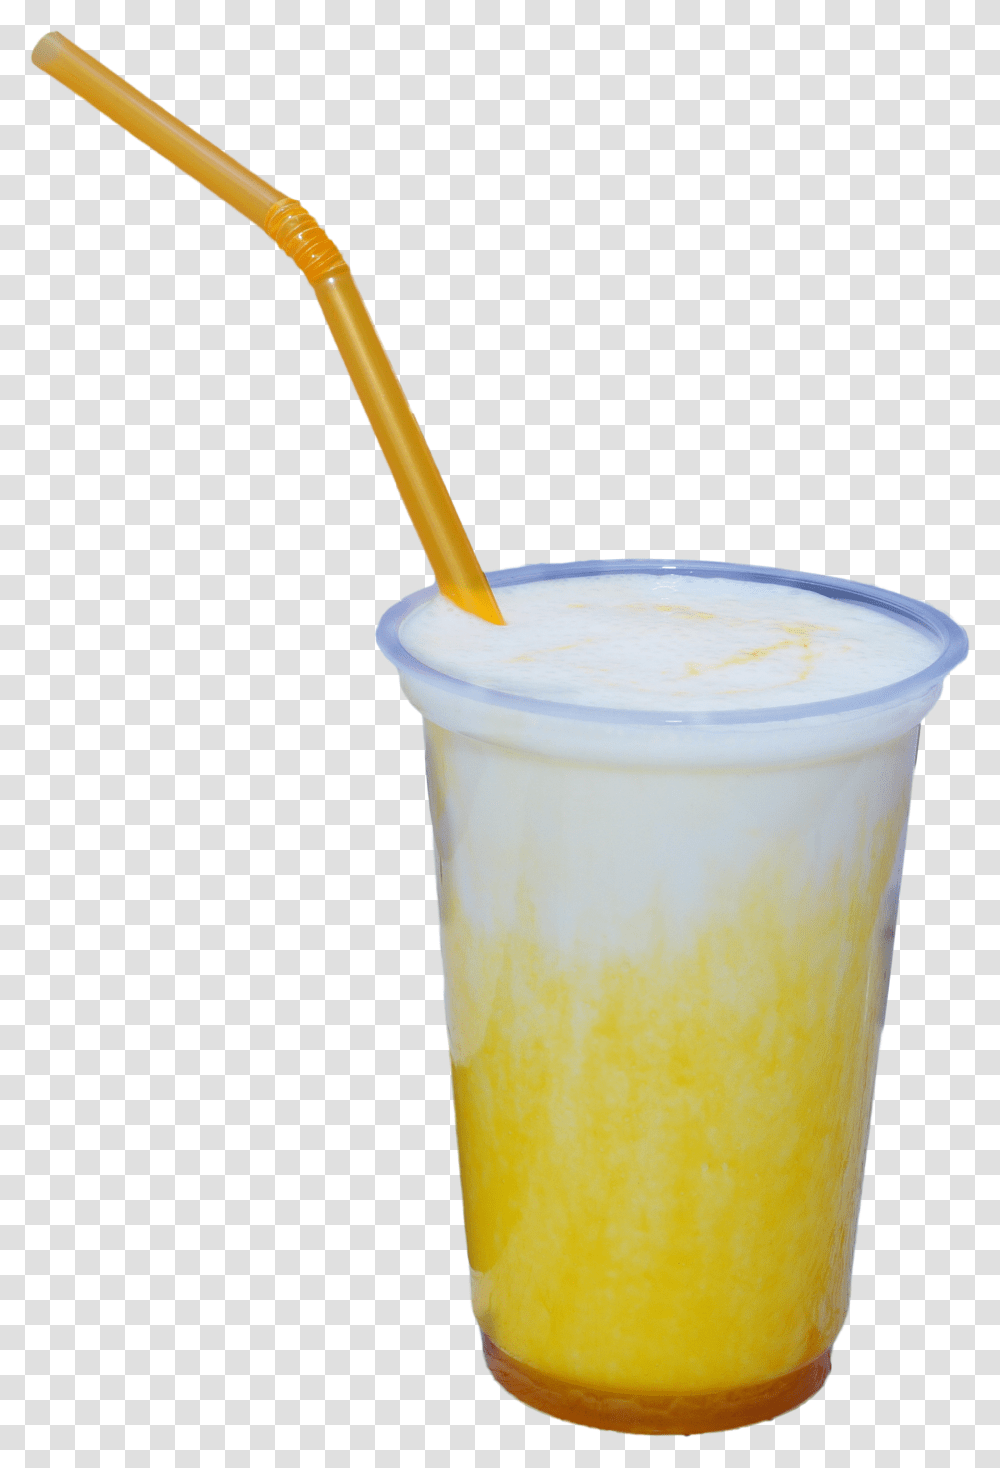 Mango Cold Drink Shake Glass Frozen Carbonated Beverage, Juice, Lemonade, Dairy, Milk Transparent Png